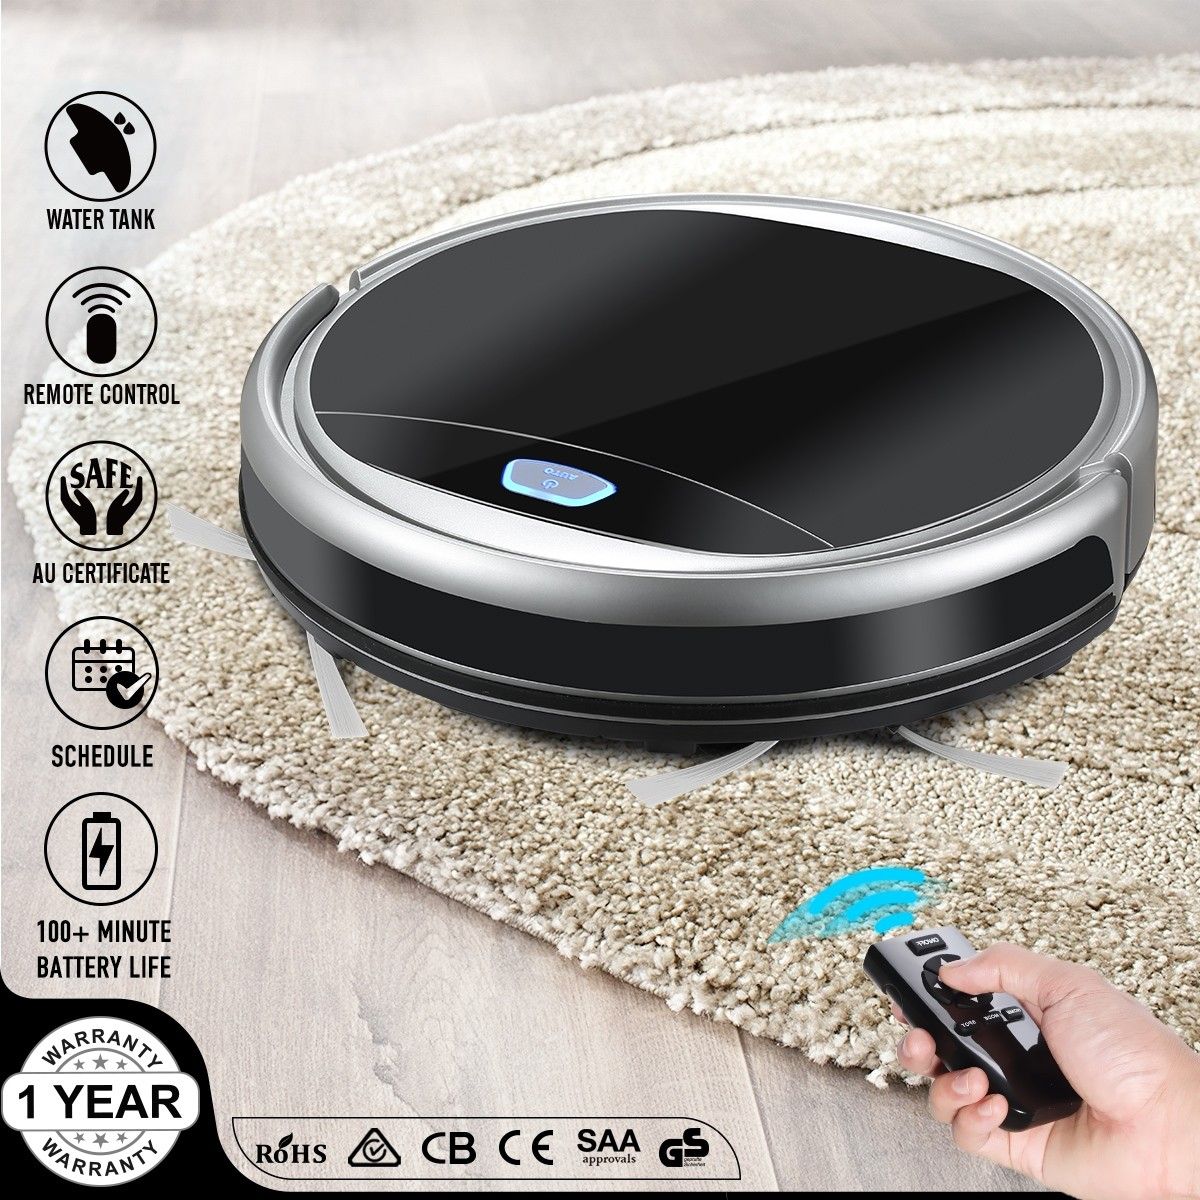 Maxkon Smart Robot Vacuum Cleaner w/Mop & Water Tank Strong Suction for Short Carpet - Black